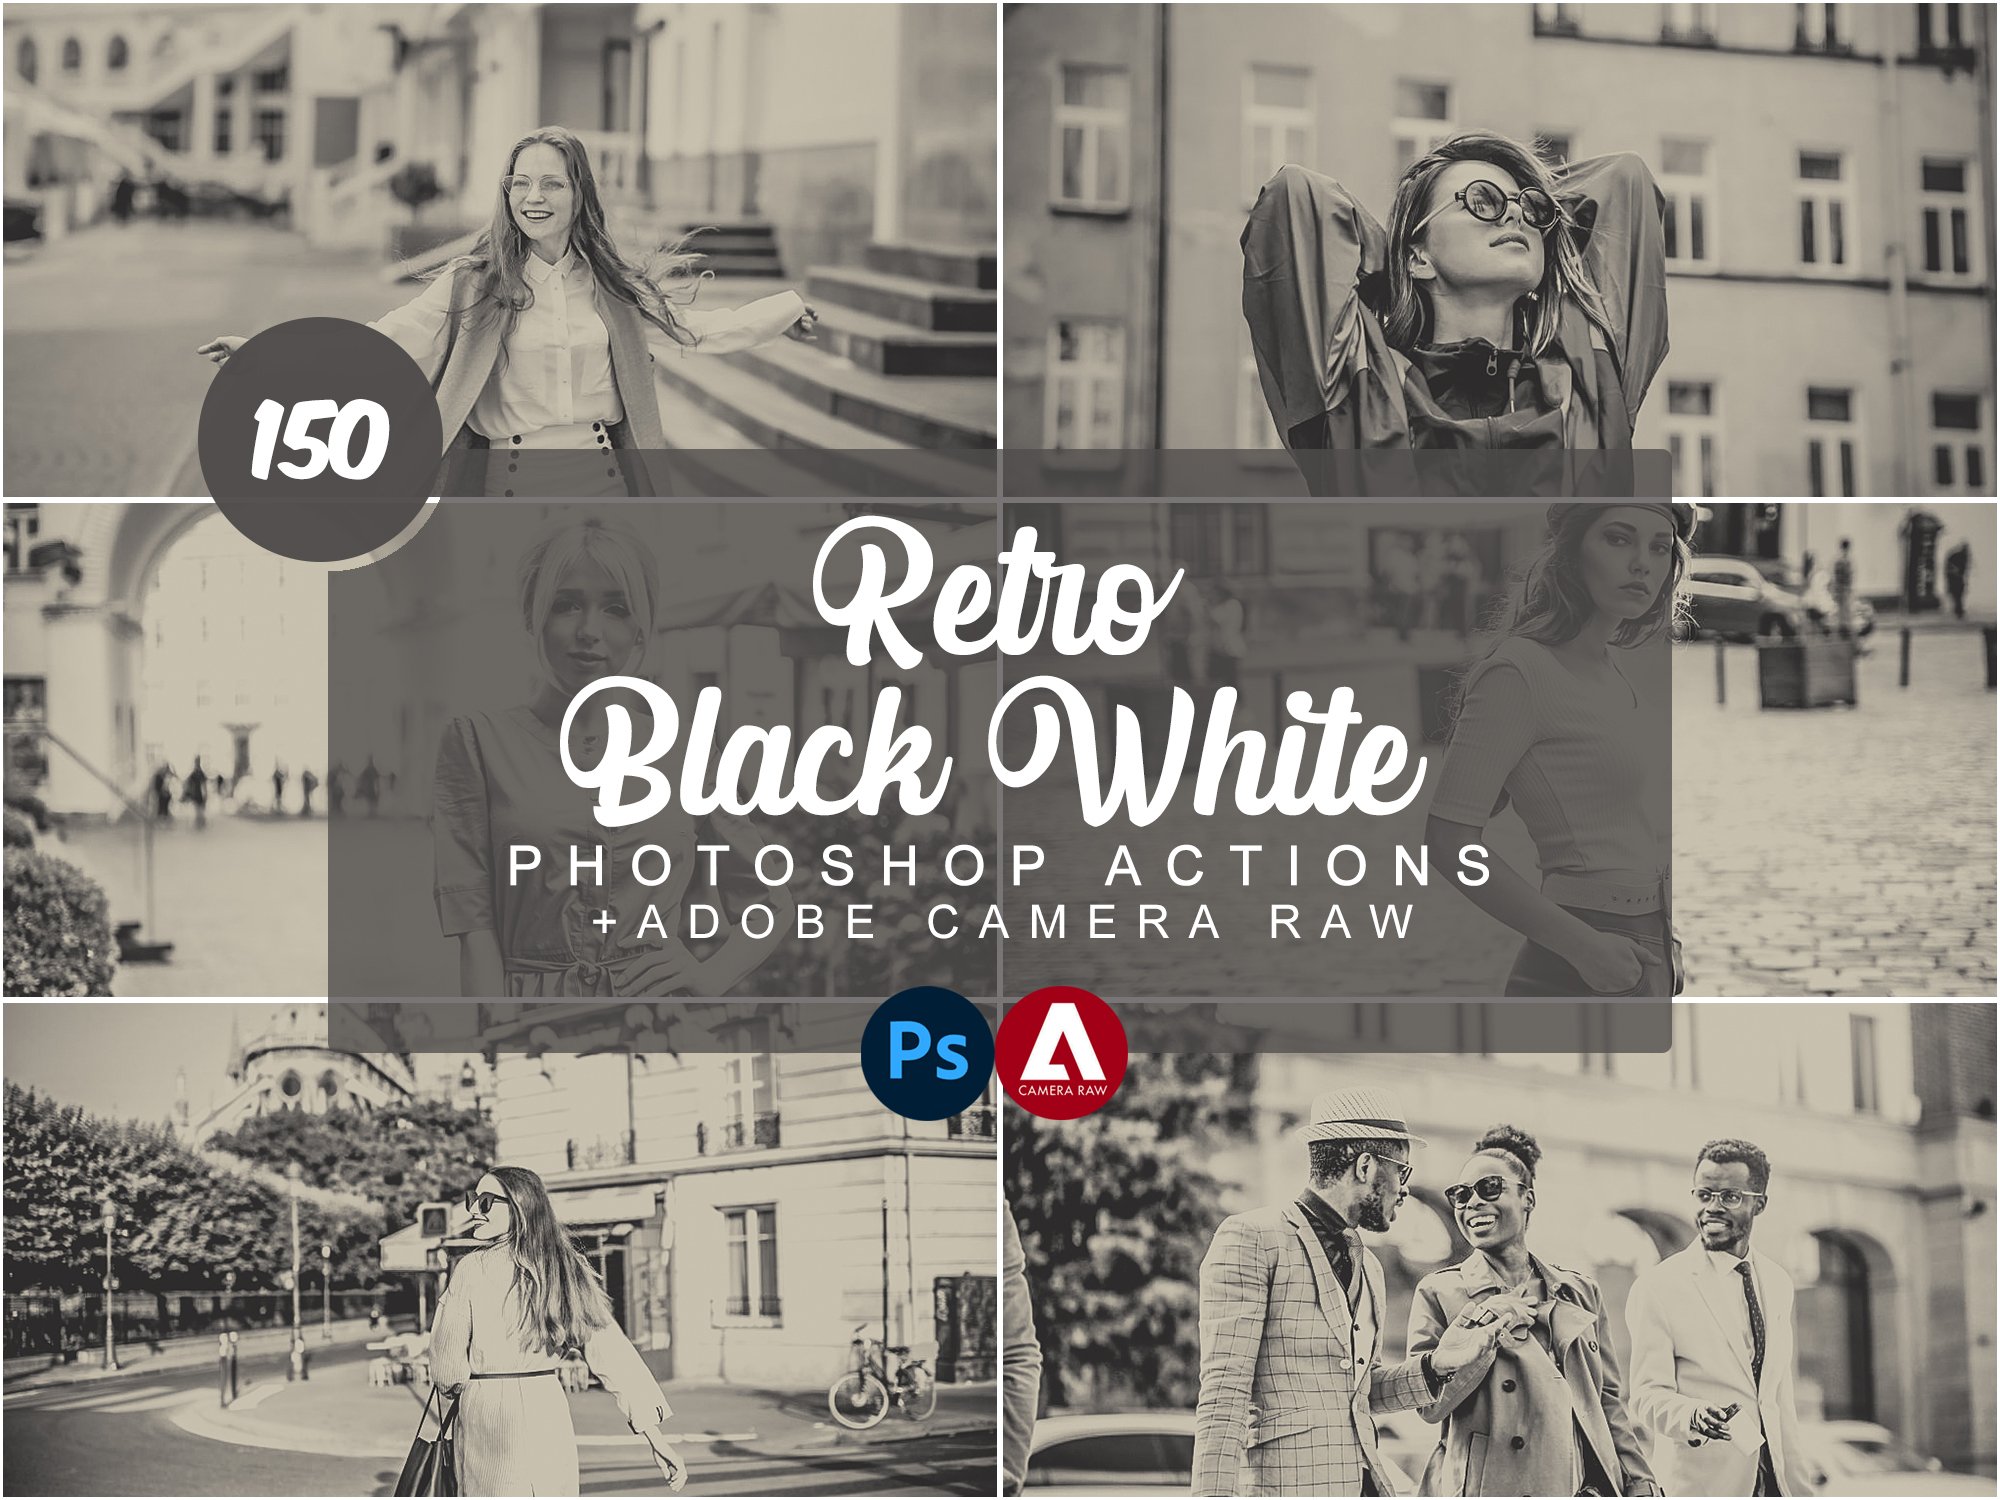 Retro Black White Photoshop Actionscover image.